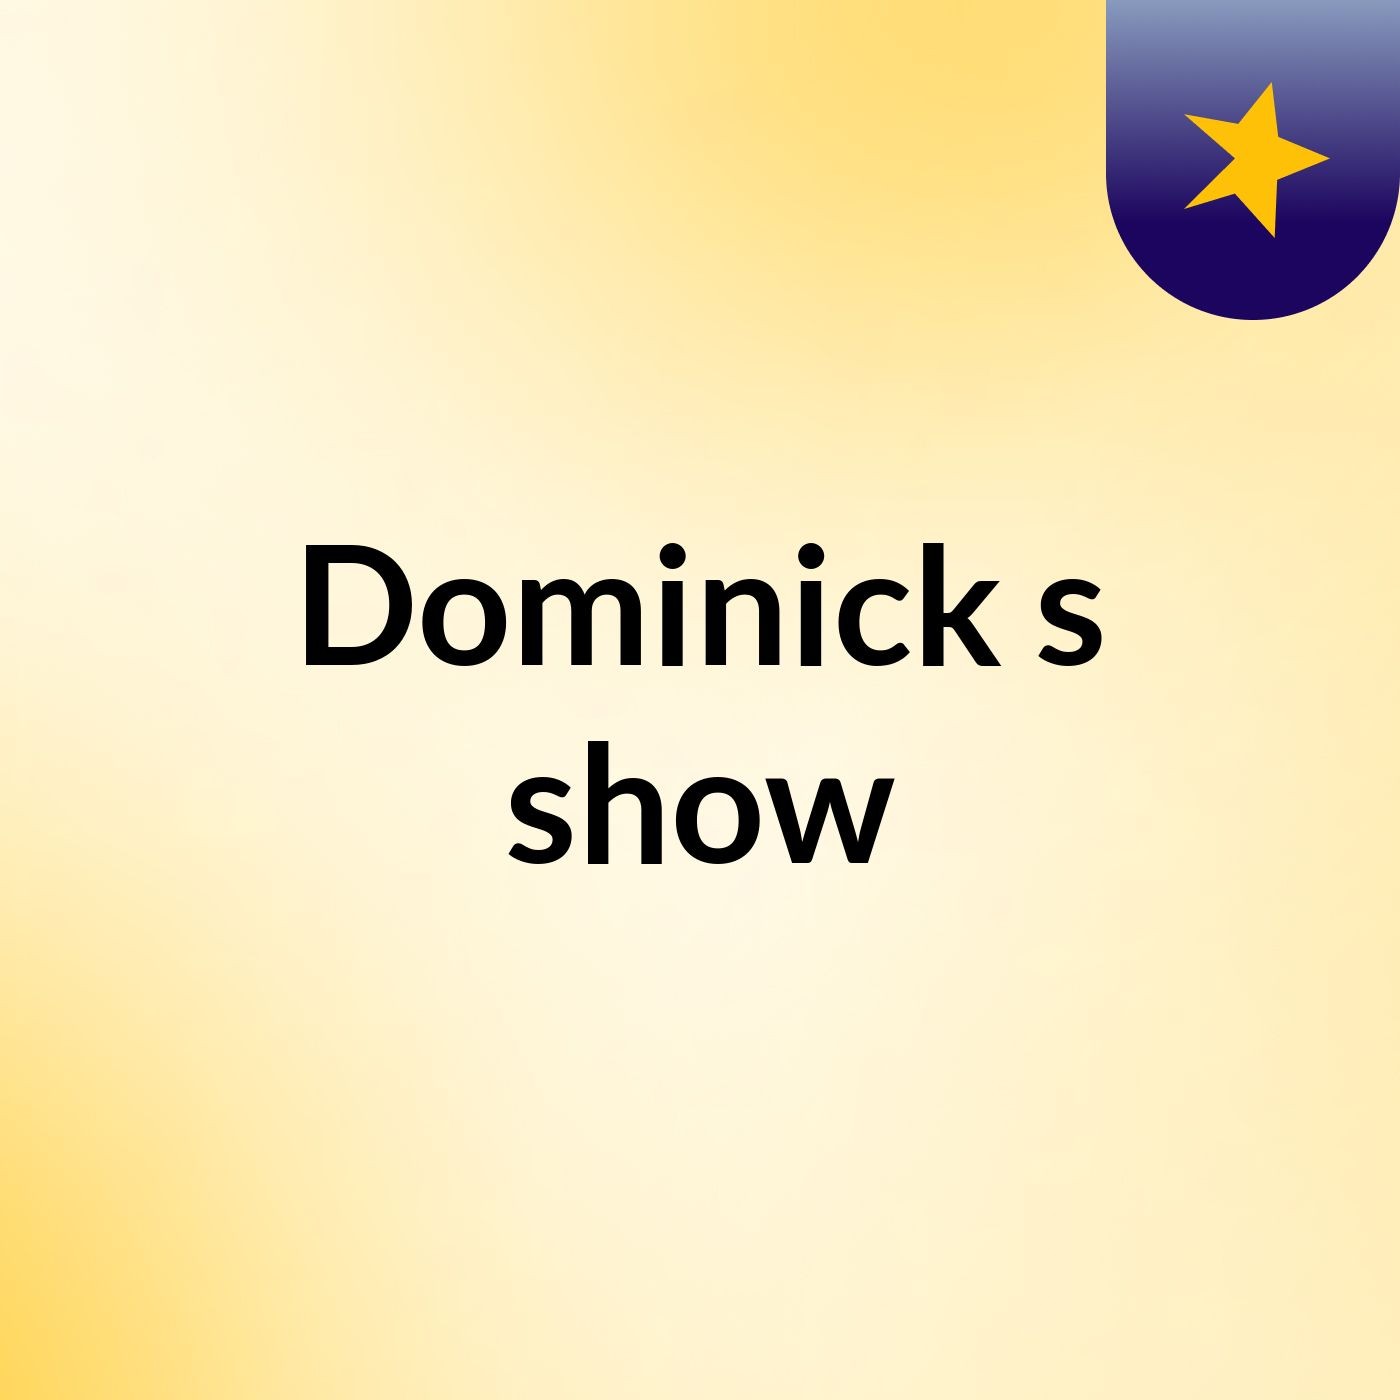 Dominick's show